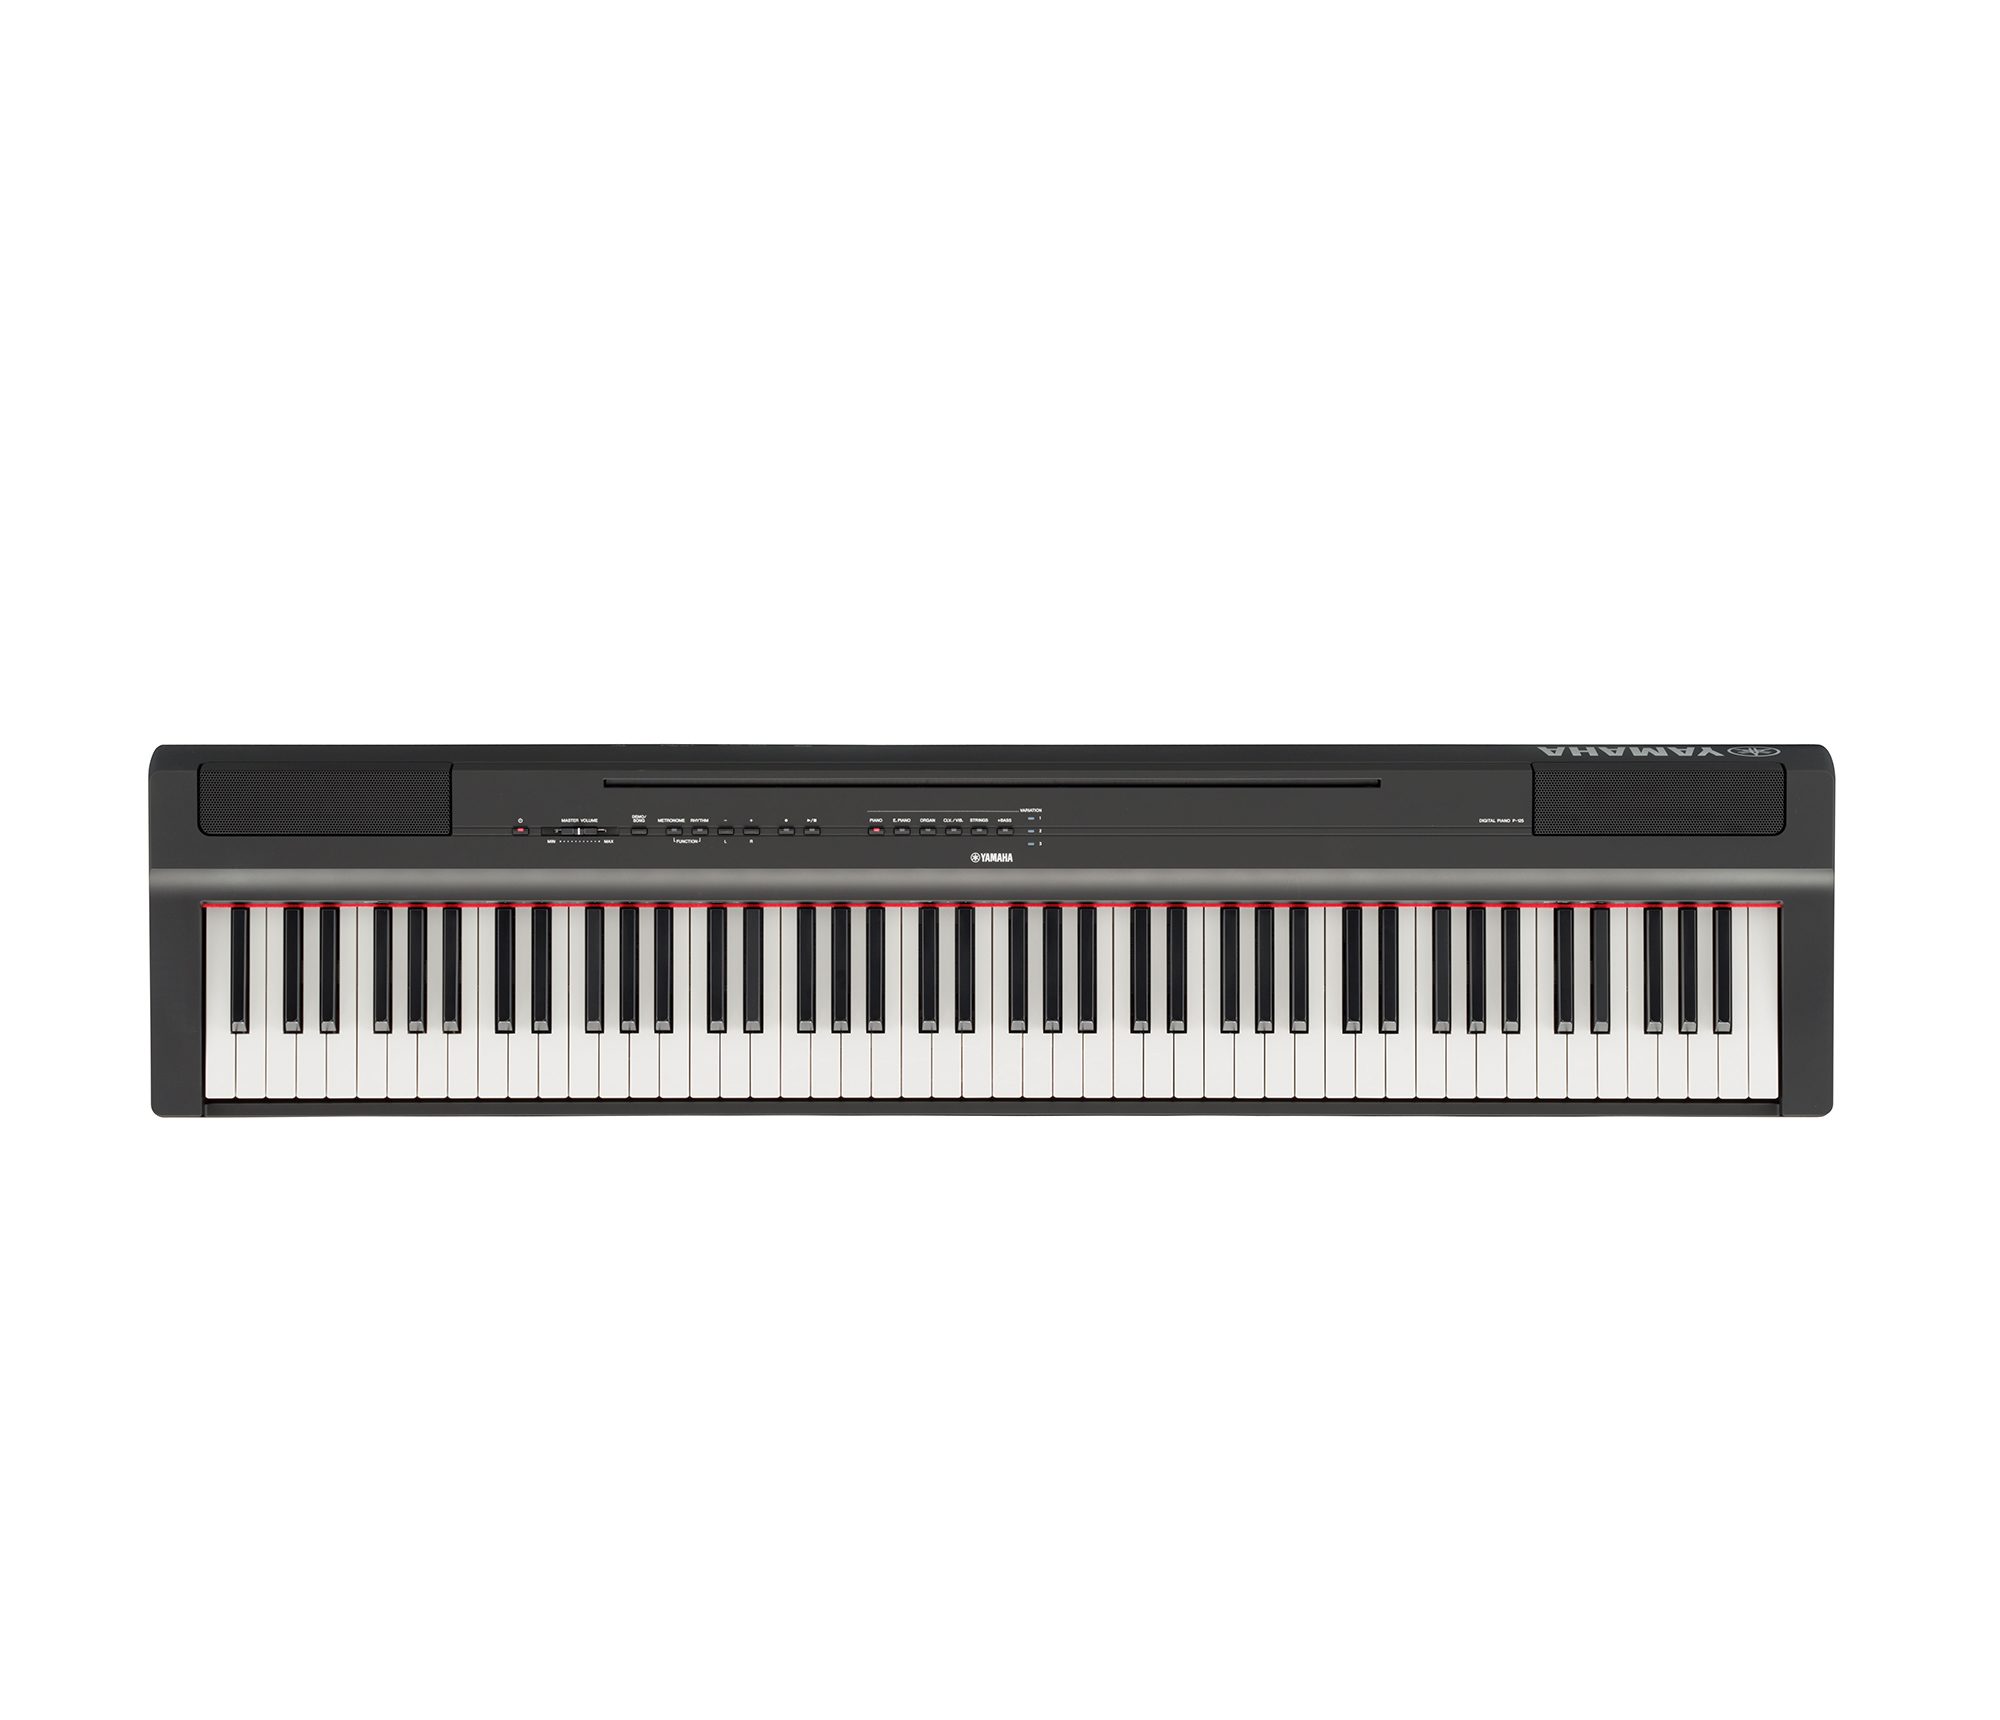 YAMAHA P125B 88 WEIGHTED DIGITAL PIANO P125 KEYBOARD P-125 BLACK ELECTRONIC PIANO